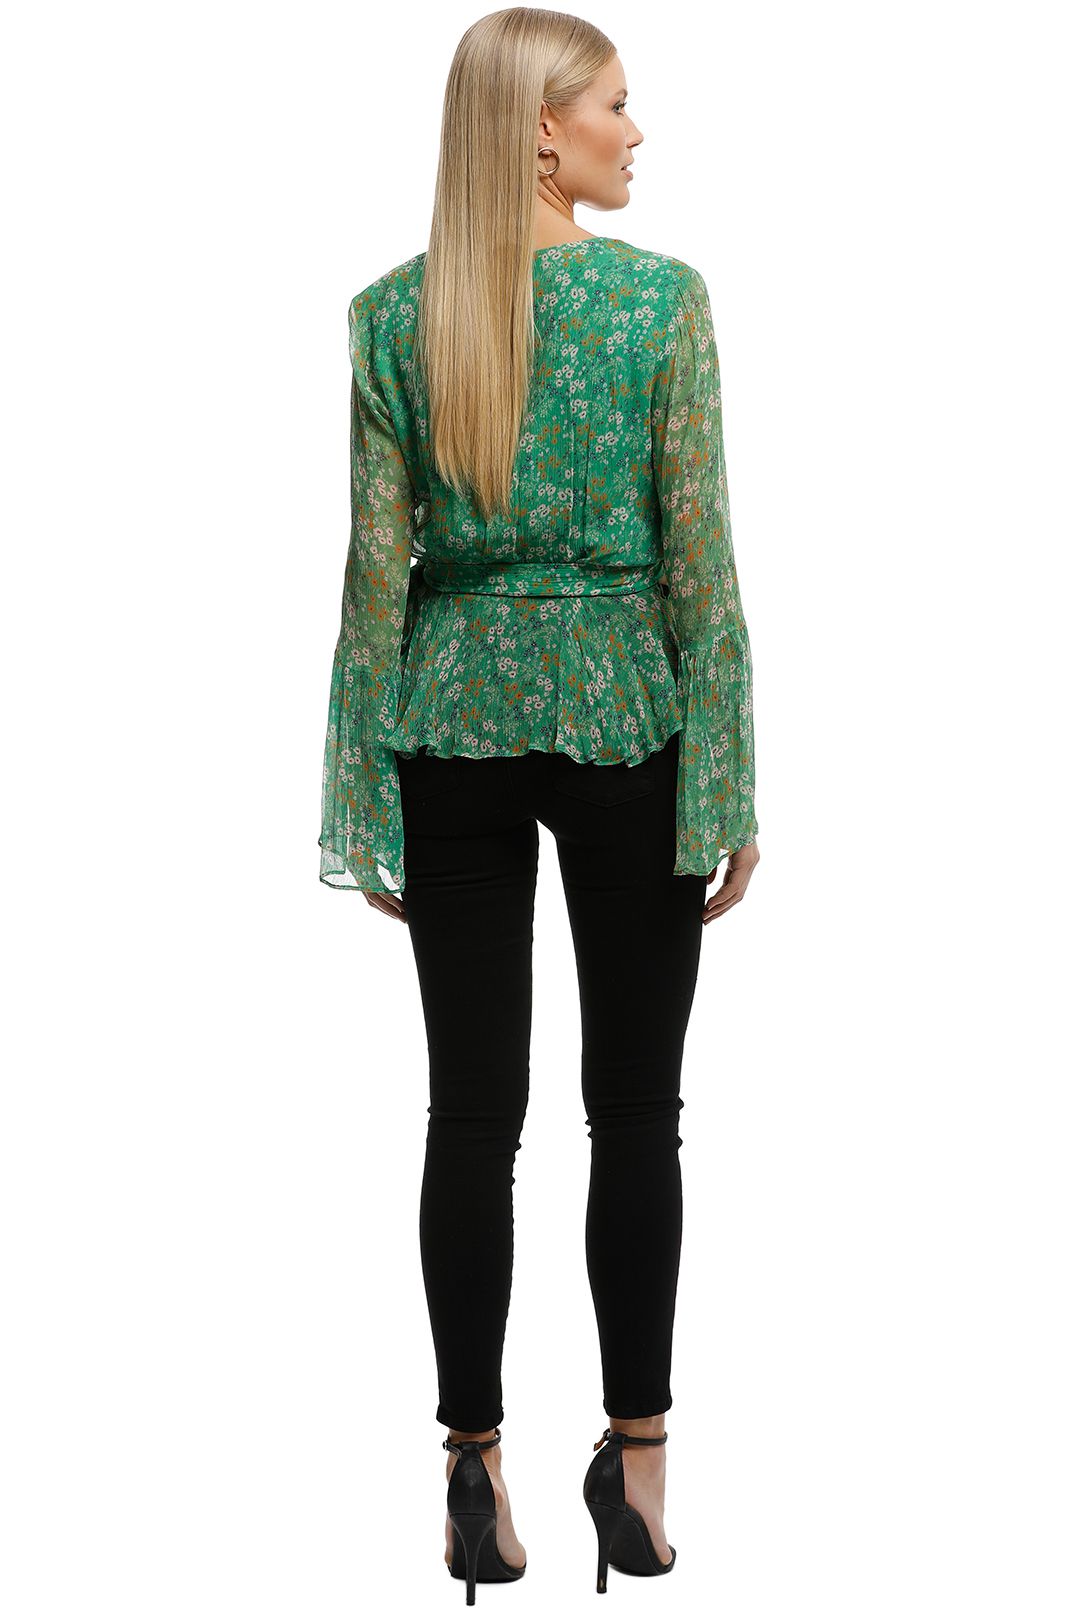 Stevie May - Jade Valentine LS Top - Floral Green - Back